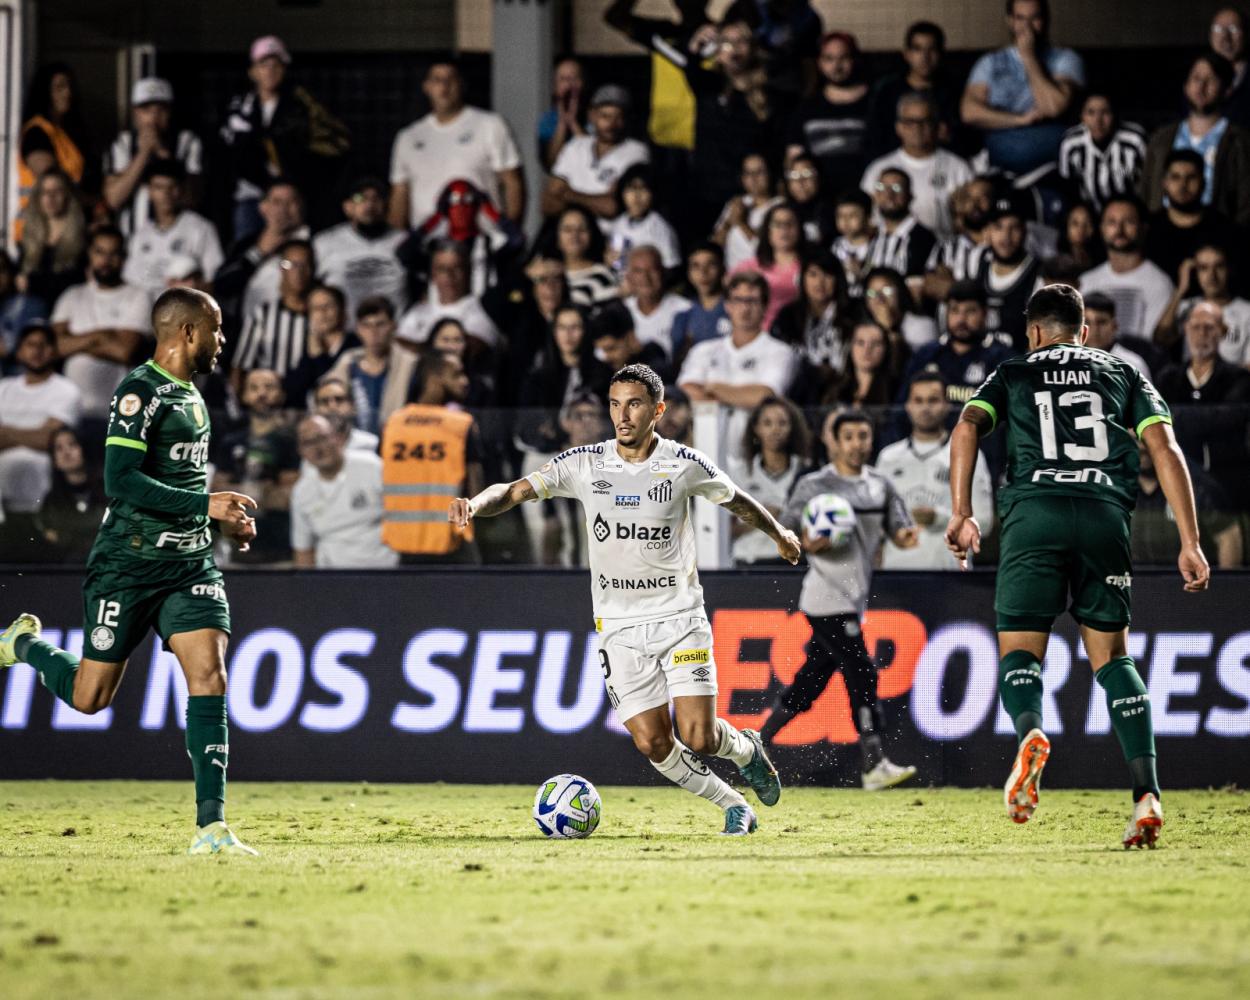 Foto: Raul Baretta / Santos FC